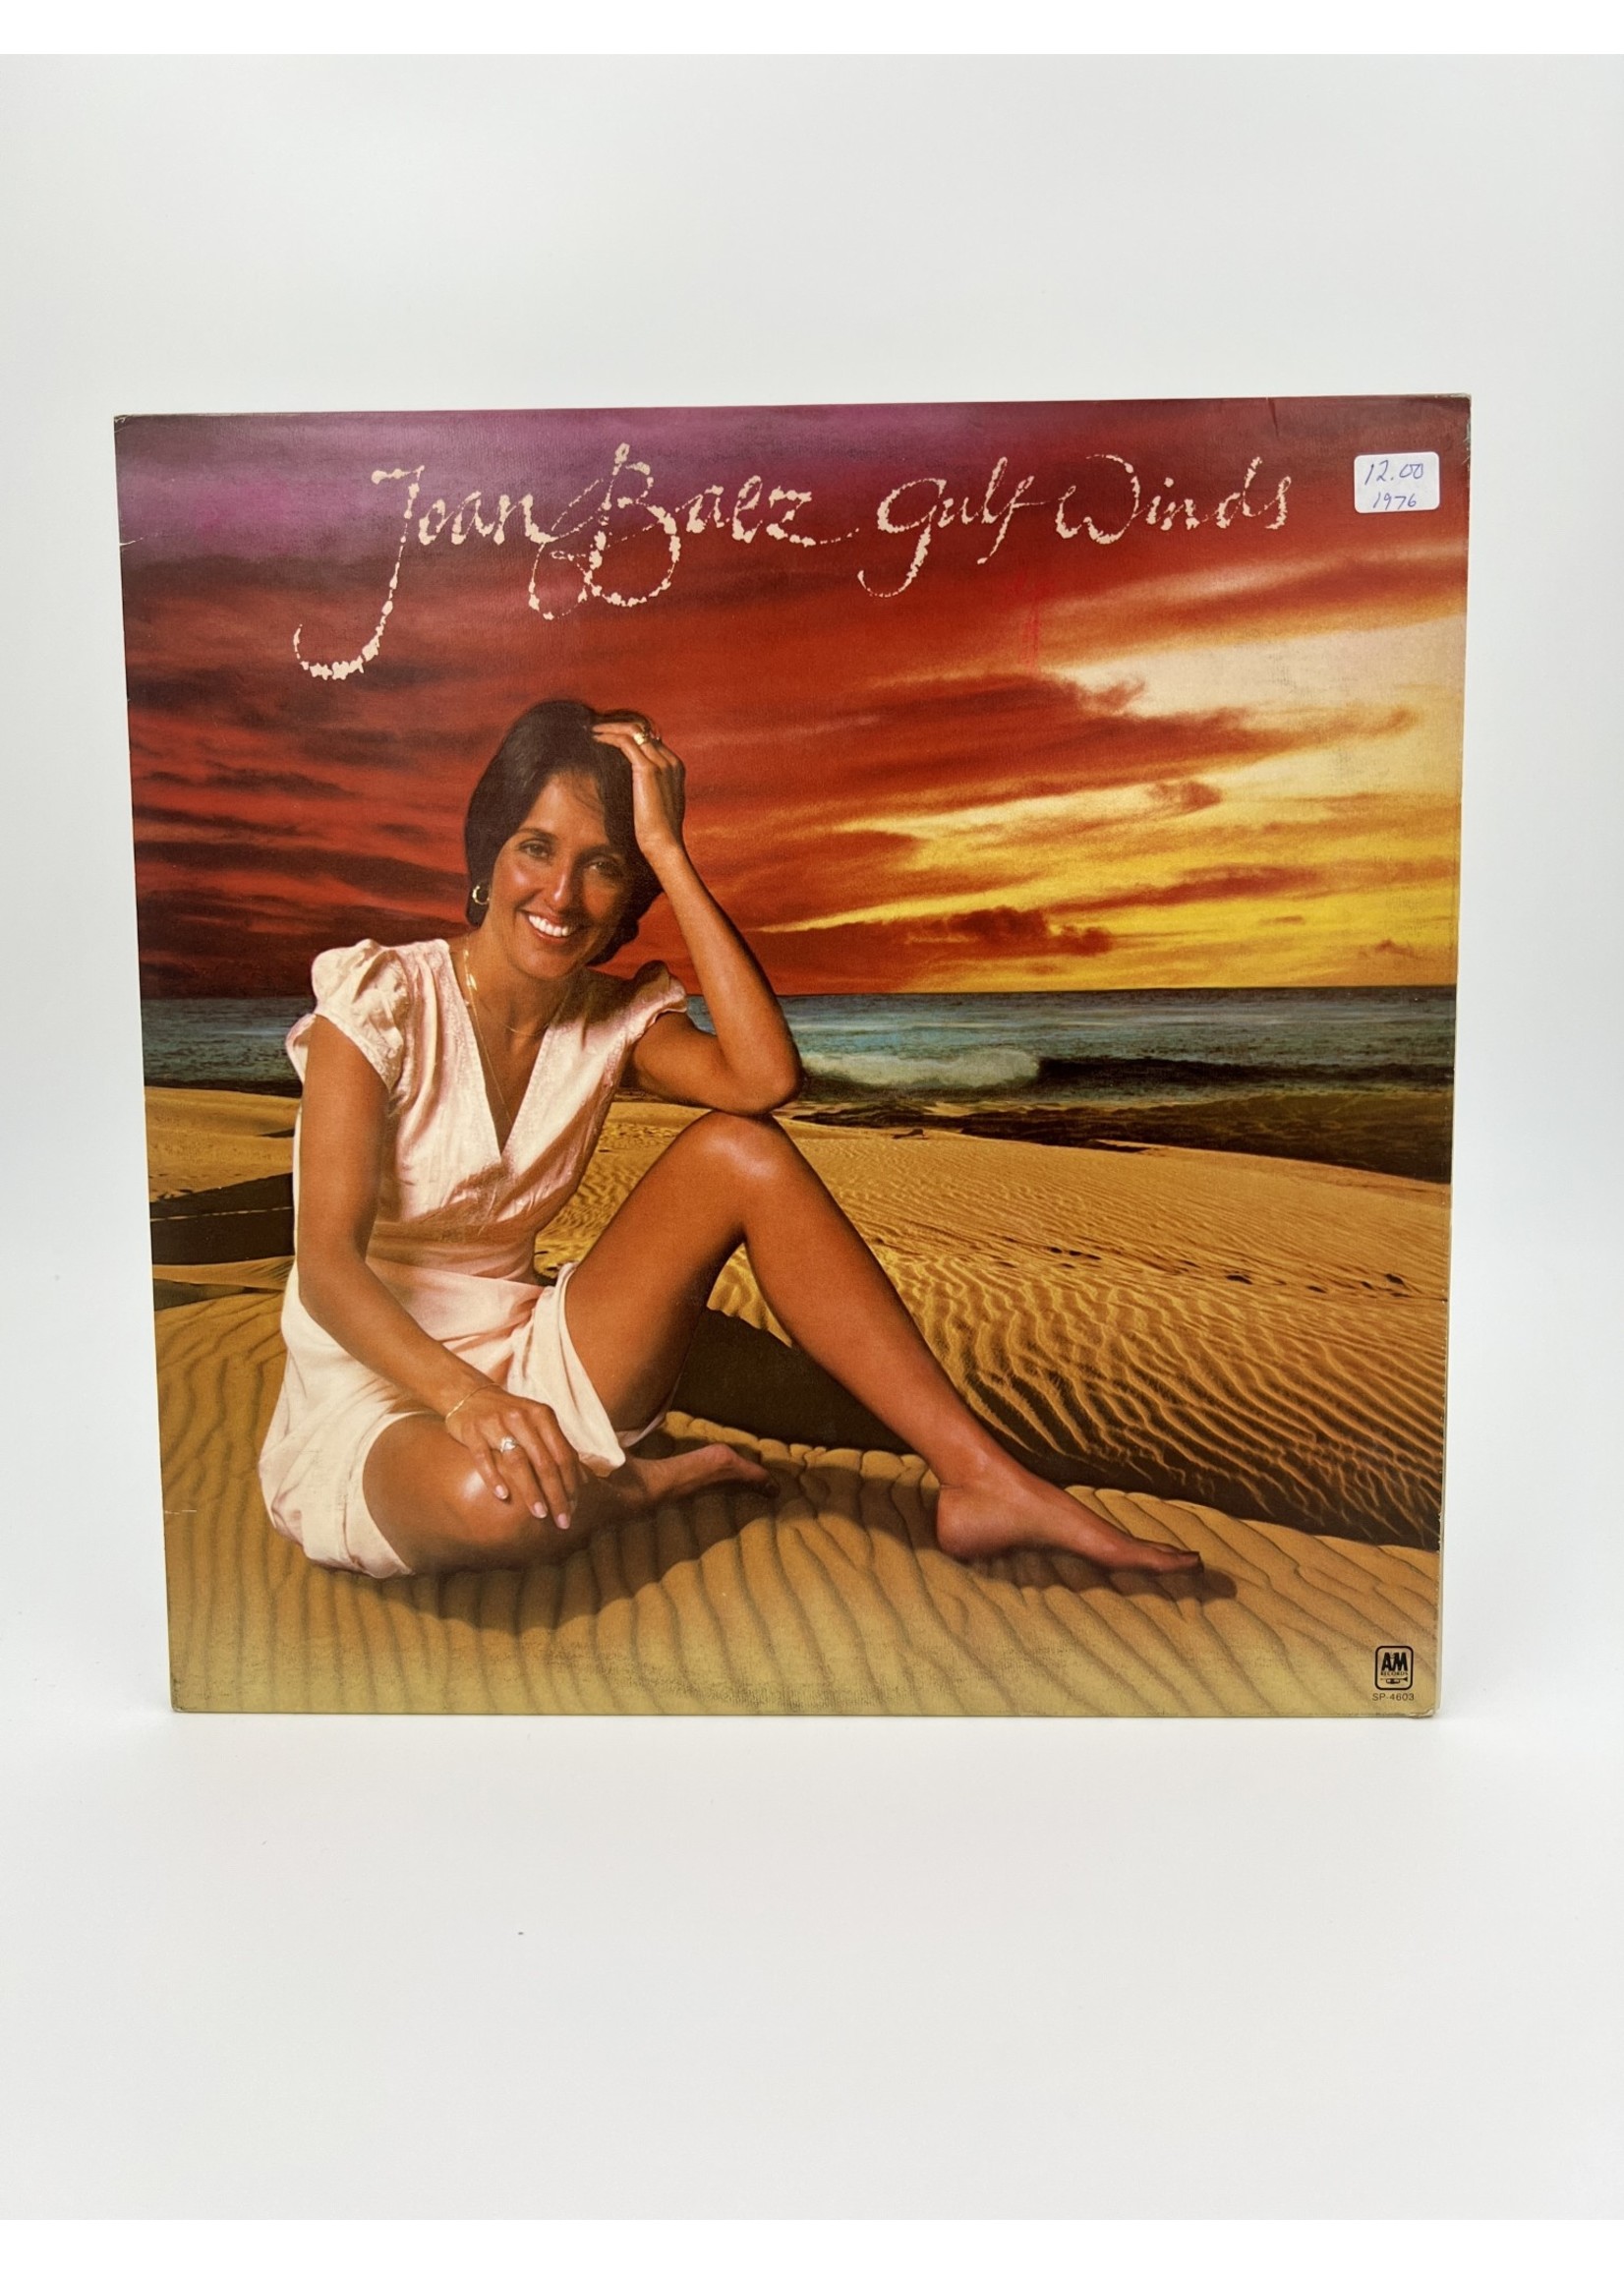 LP Joan Baez Gulf Winds Lp Record